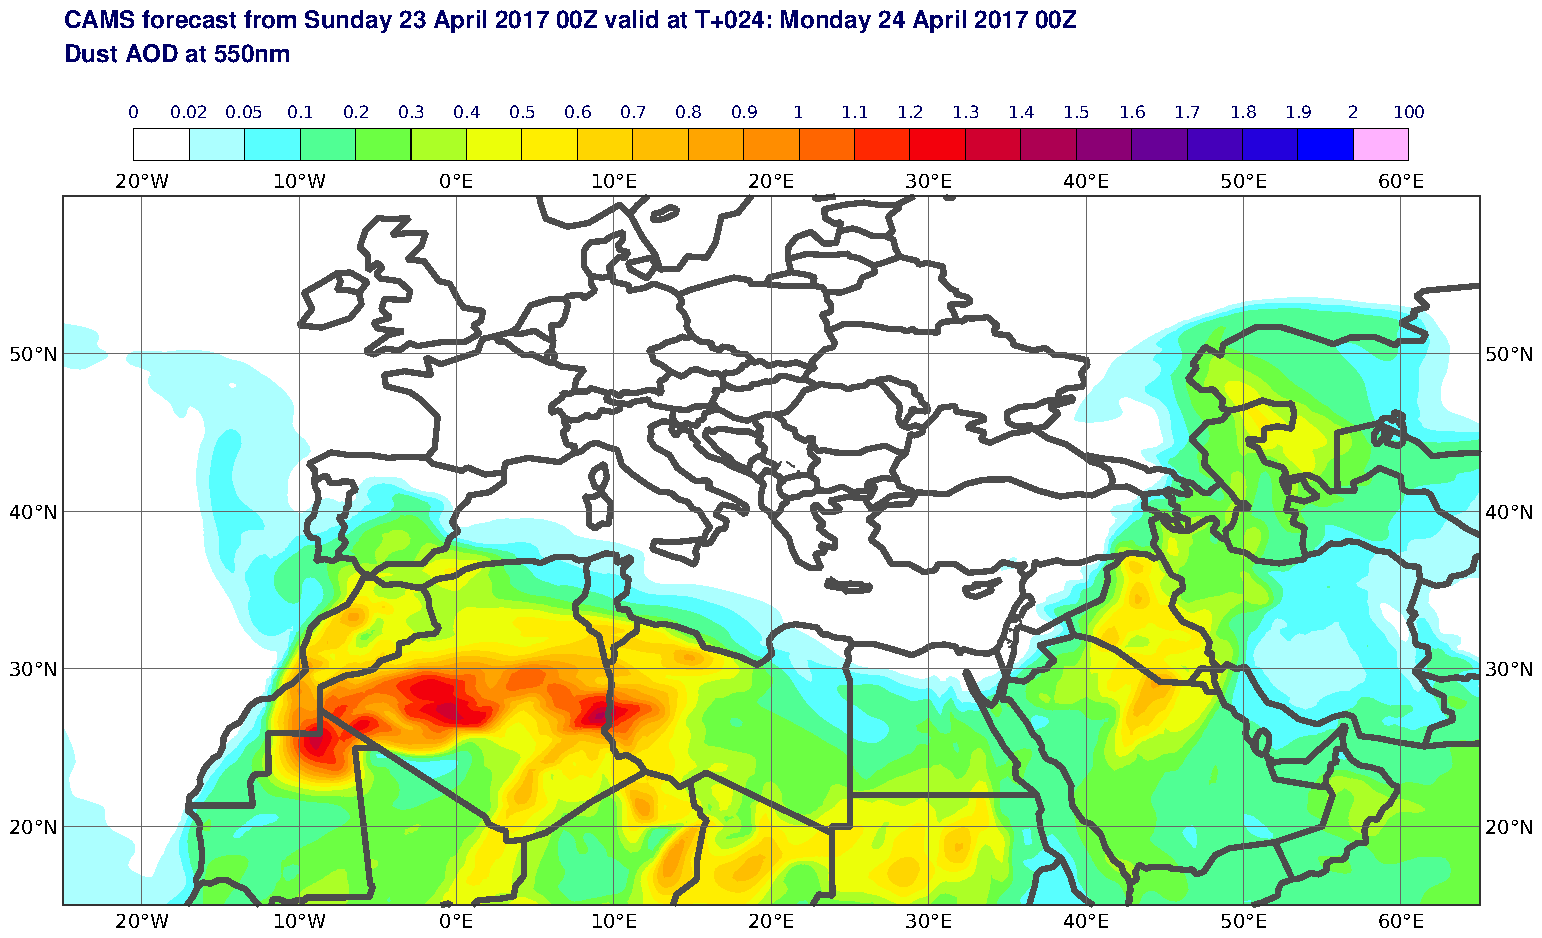 Dust AOD at 550nm valid at T24 - 2017-04-24 00:00